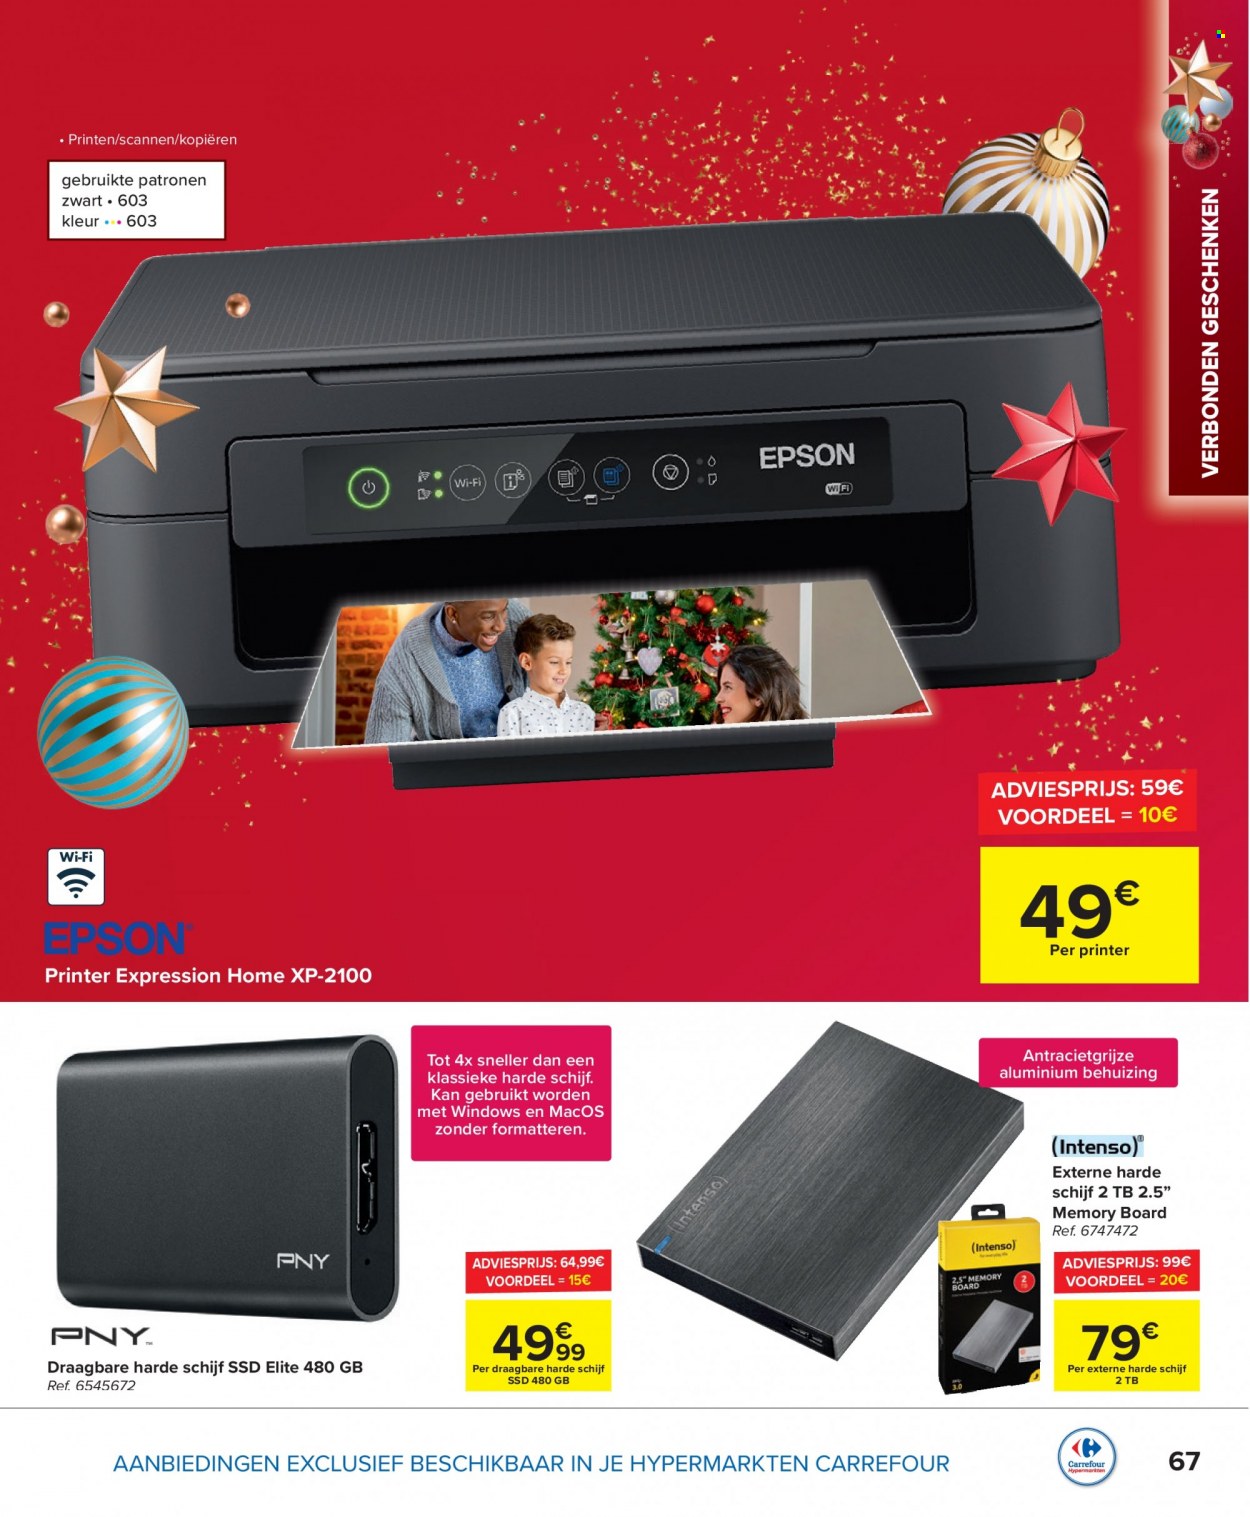 thumbnail - Carrefour hypermarkt-aanbieding - 17/11/2021 - 24/12/2021 -  producten in de aanbieding - externe harde schijf, SSD, printer. Pagina 67.